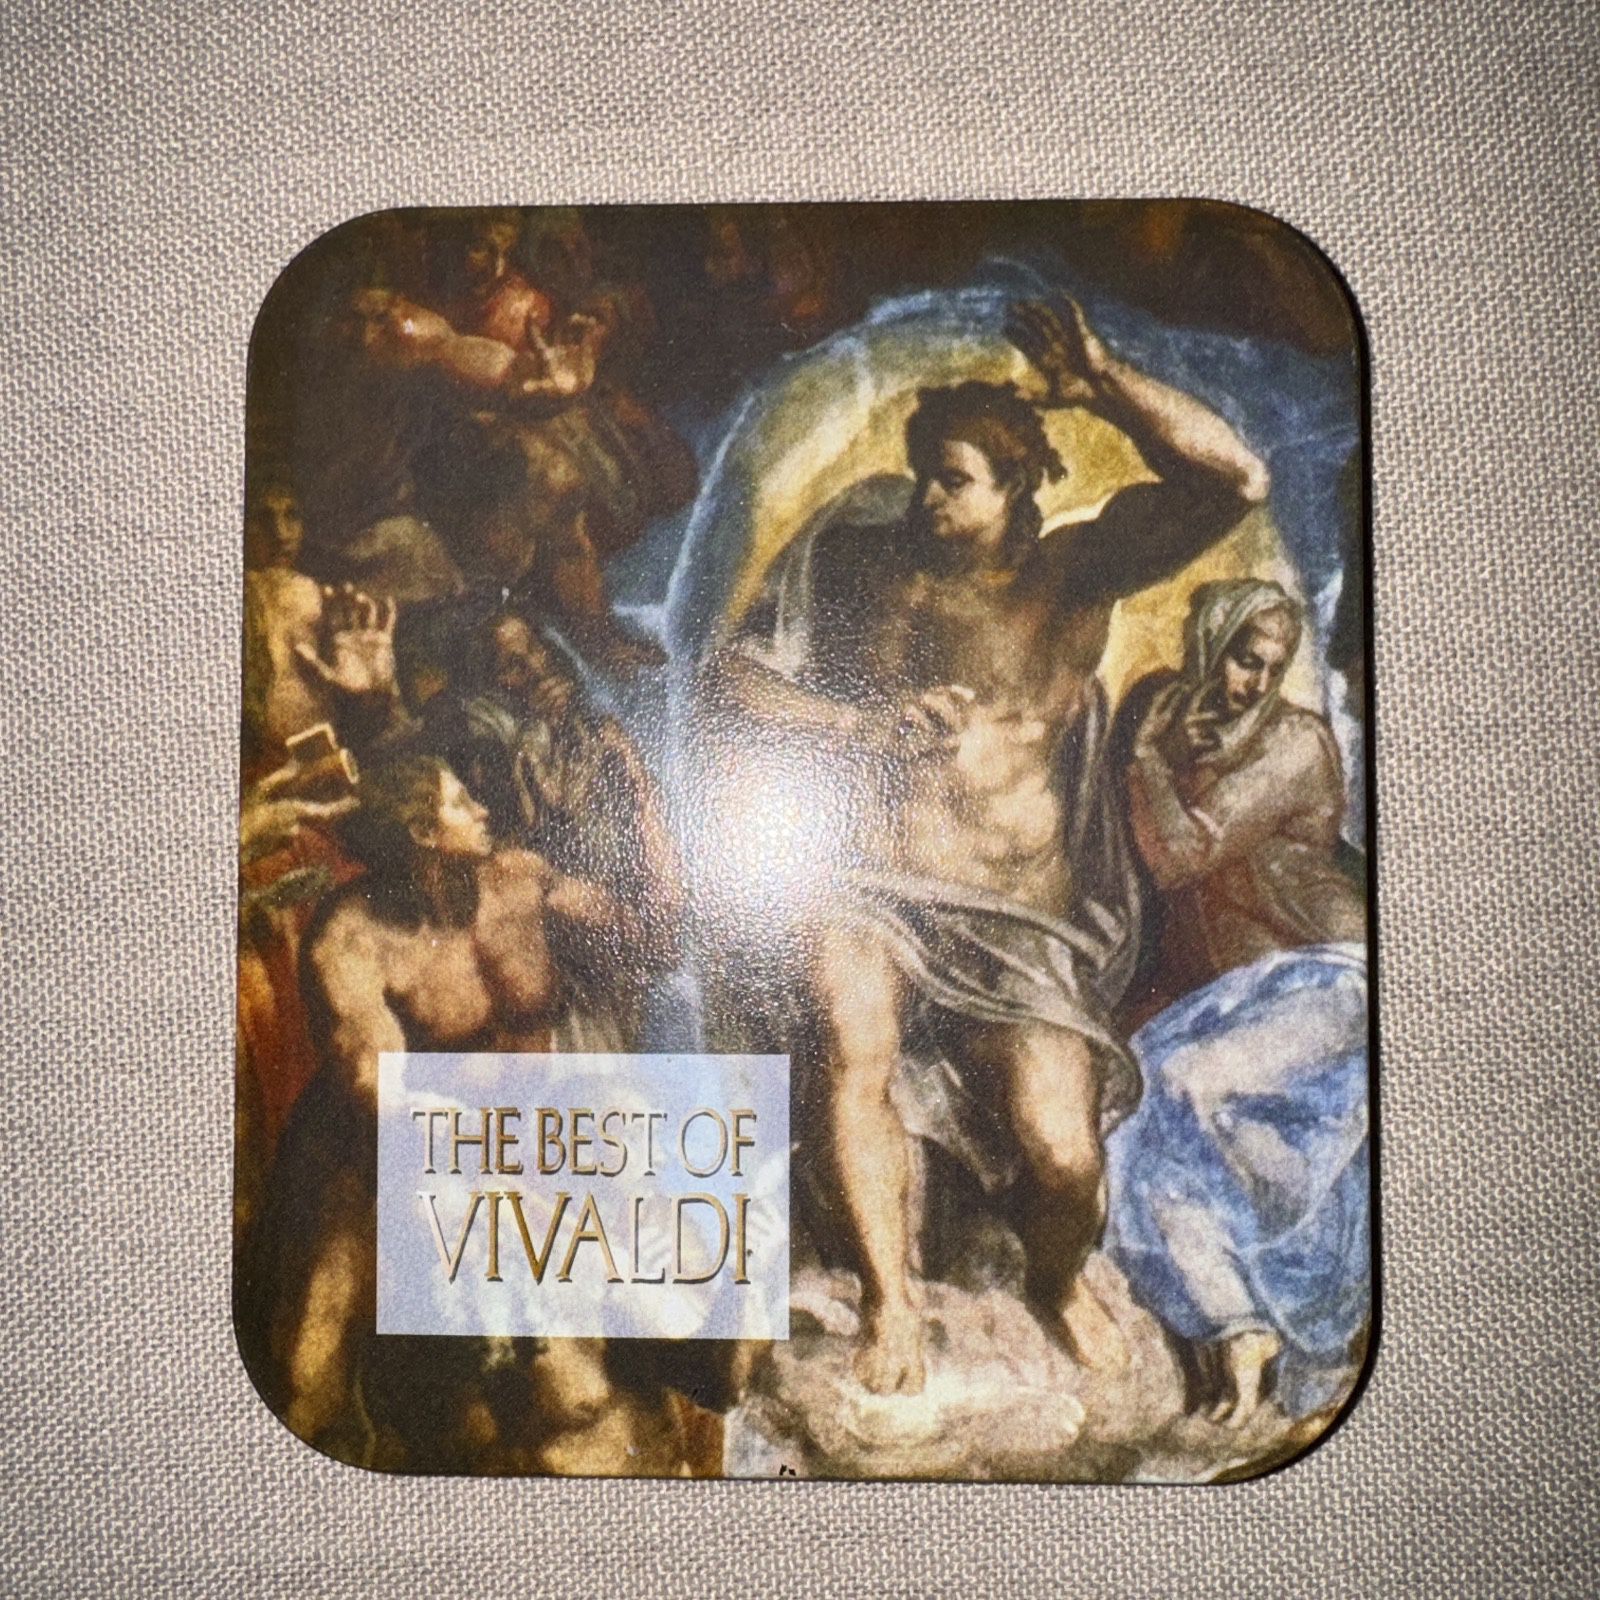 Vivaldi - Best Of CD In Metal CD Case Classical Music